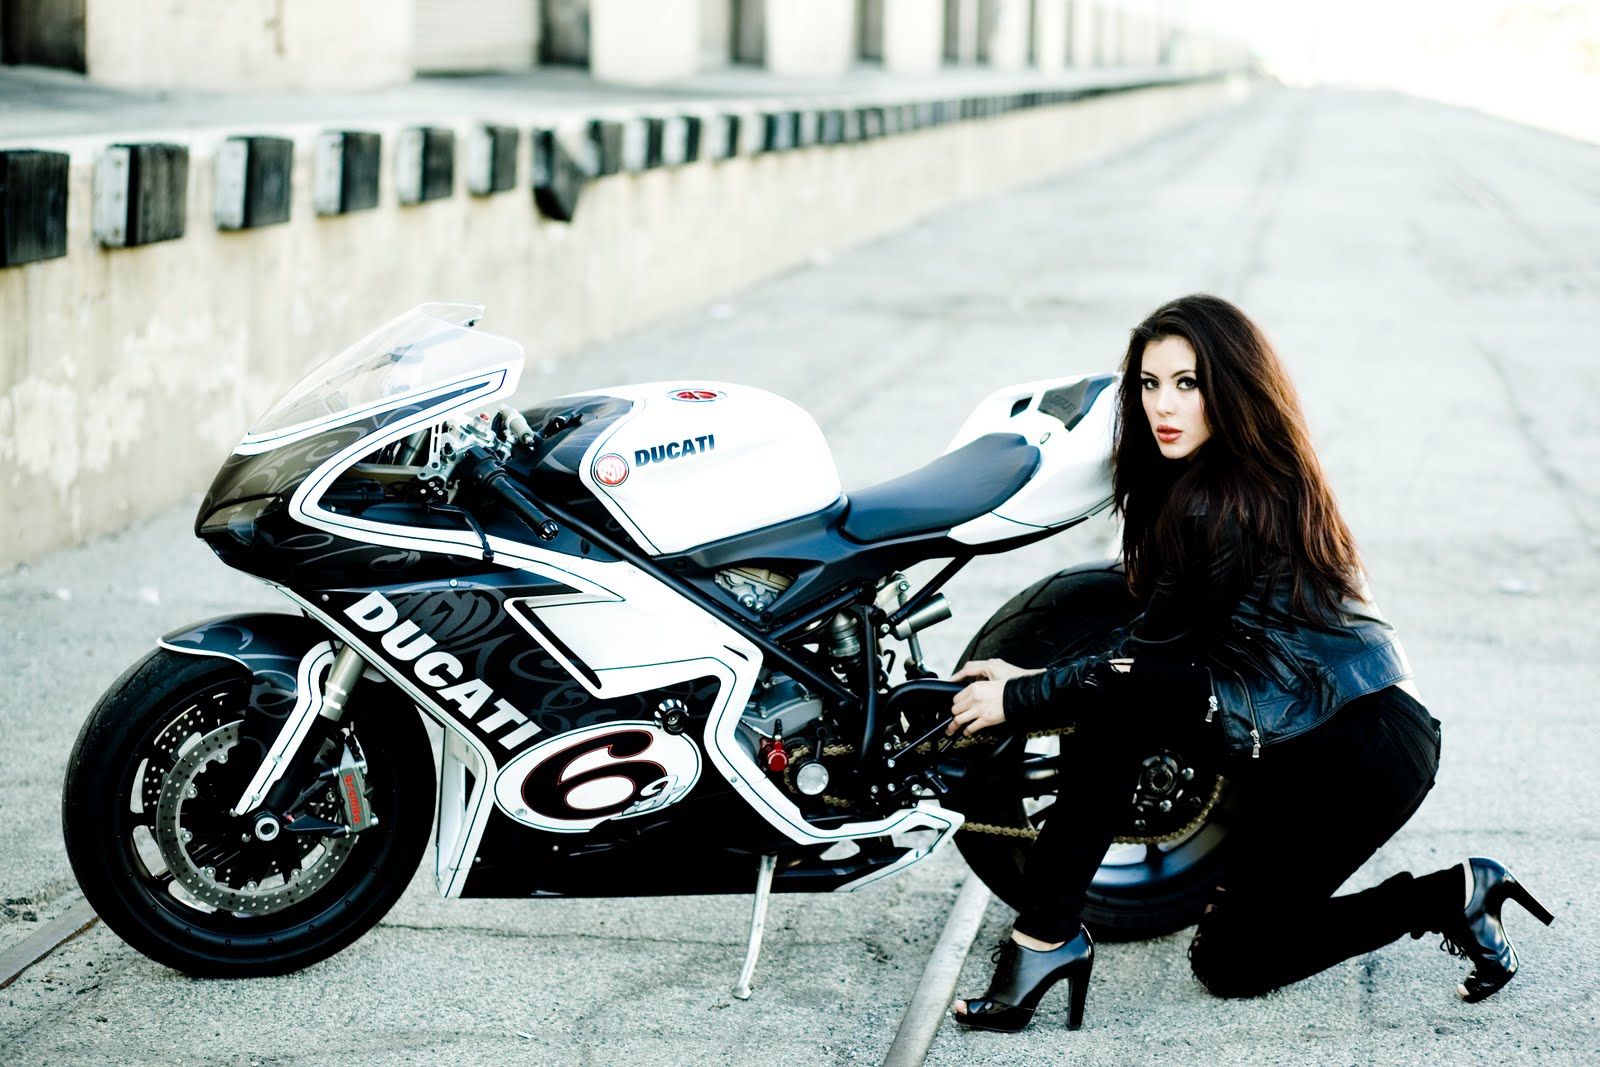 motorcycle girl wallpaper,land vehicle,vehicle,motorcycle,motorcycle helmet,motor vehicle